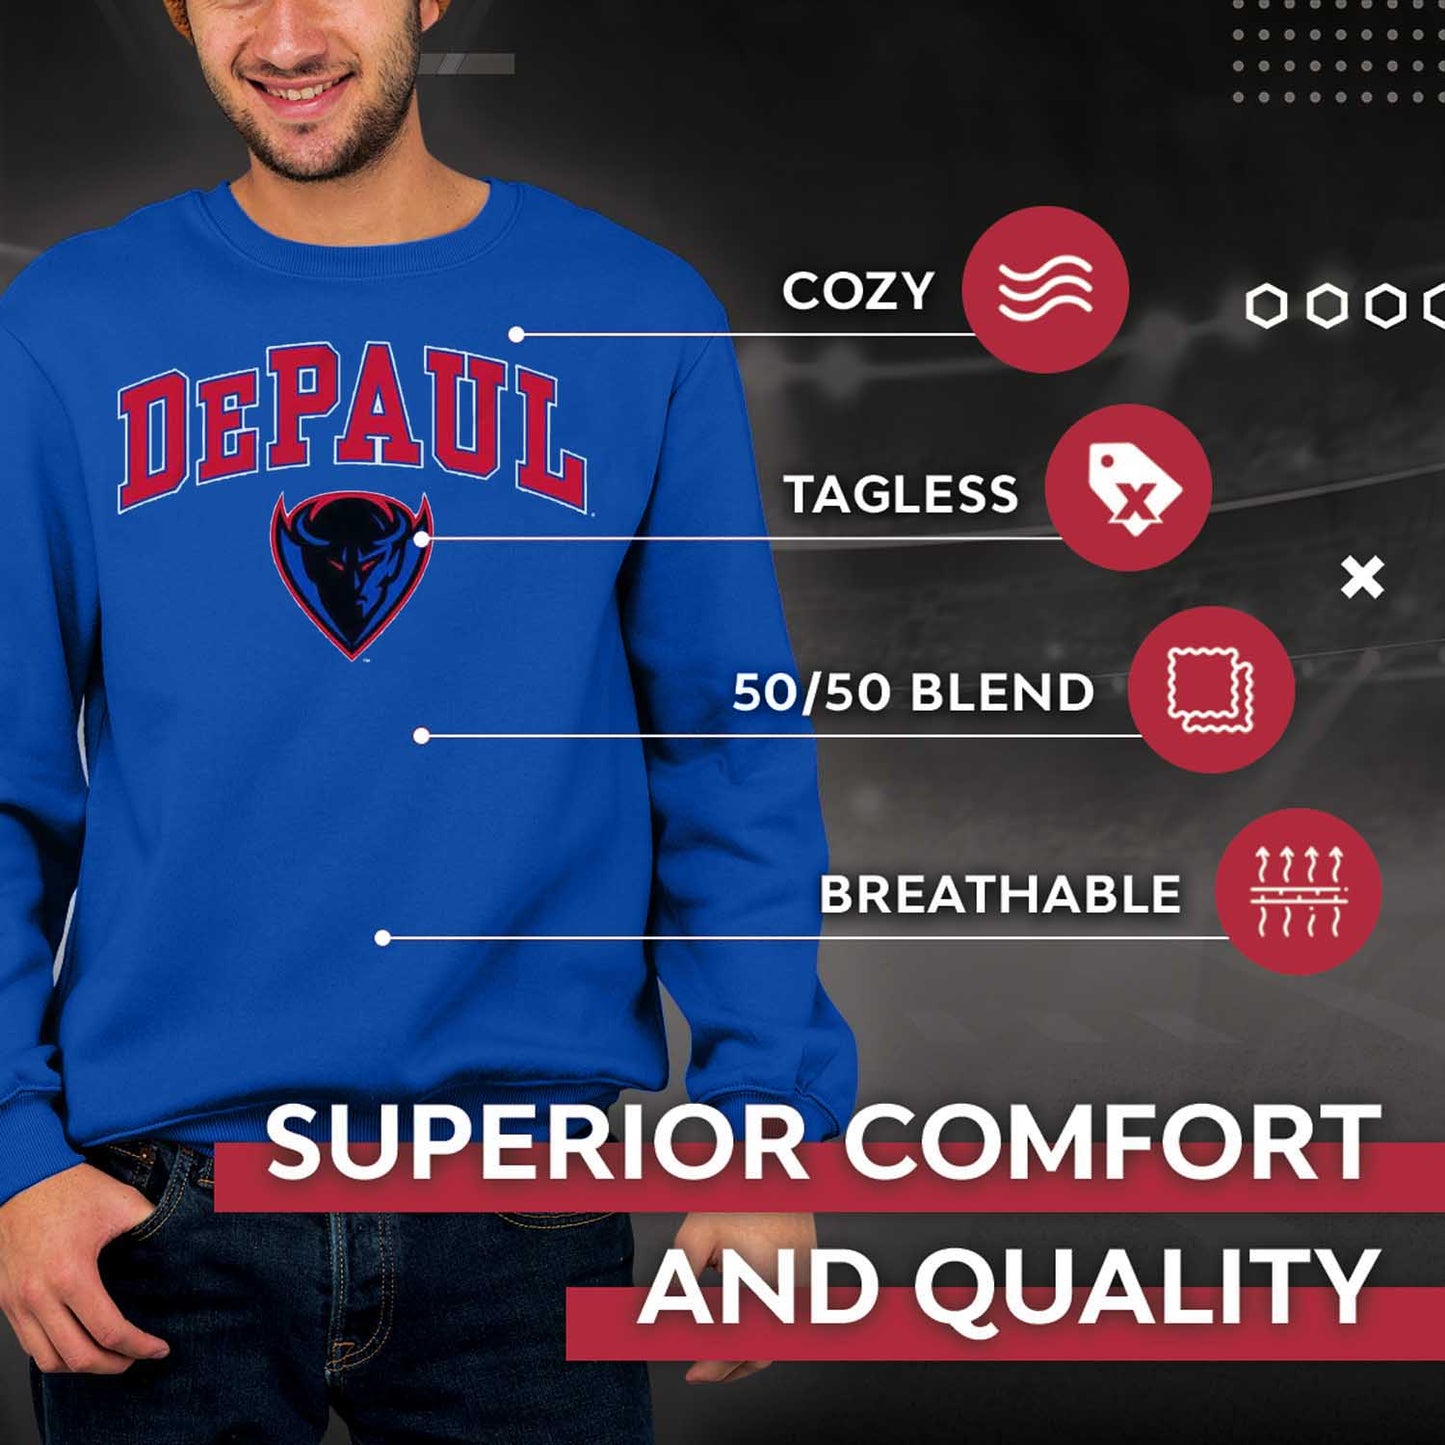 DePaul Blue Demons Adult Arch & Logo Soft Style Gameday Crewneck Sweatshirt - Royal